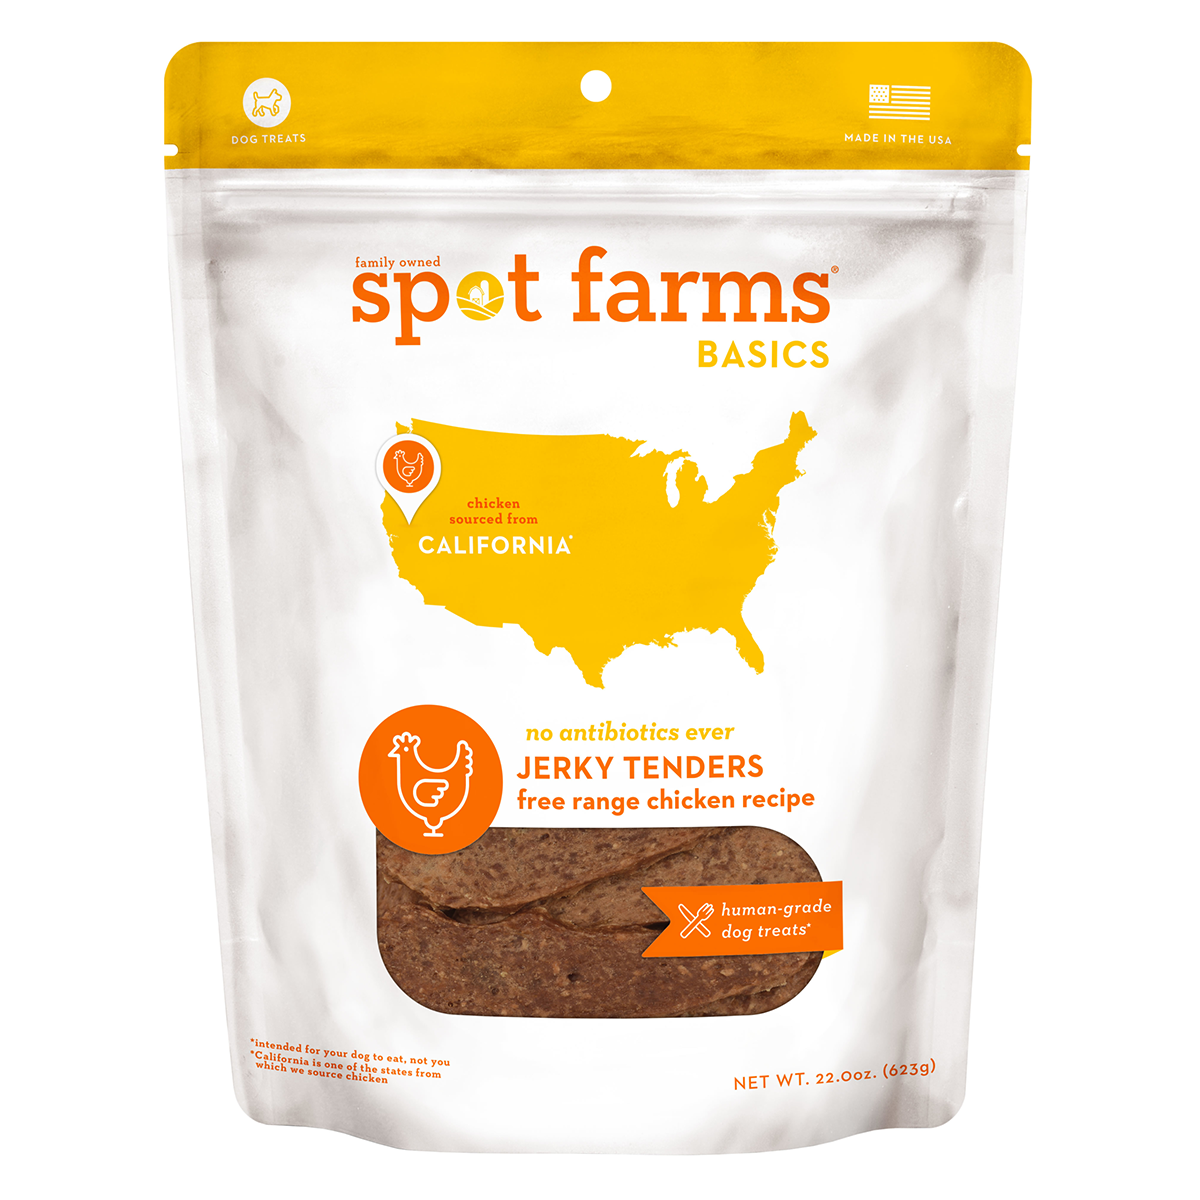 spot-farms-basics-chicken-jerky-tenders-dog-treats